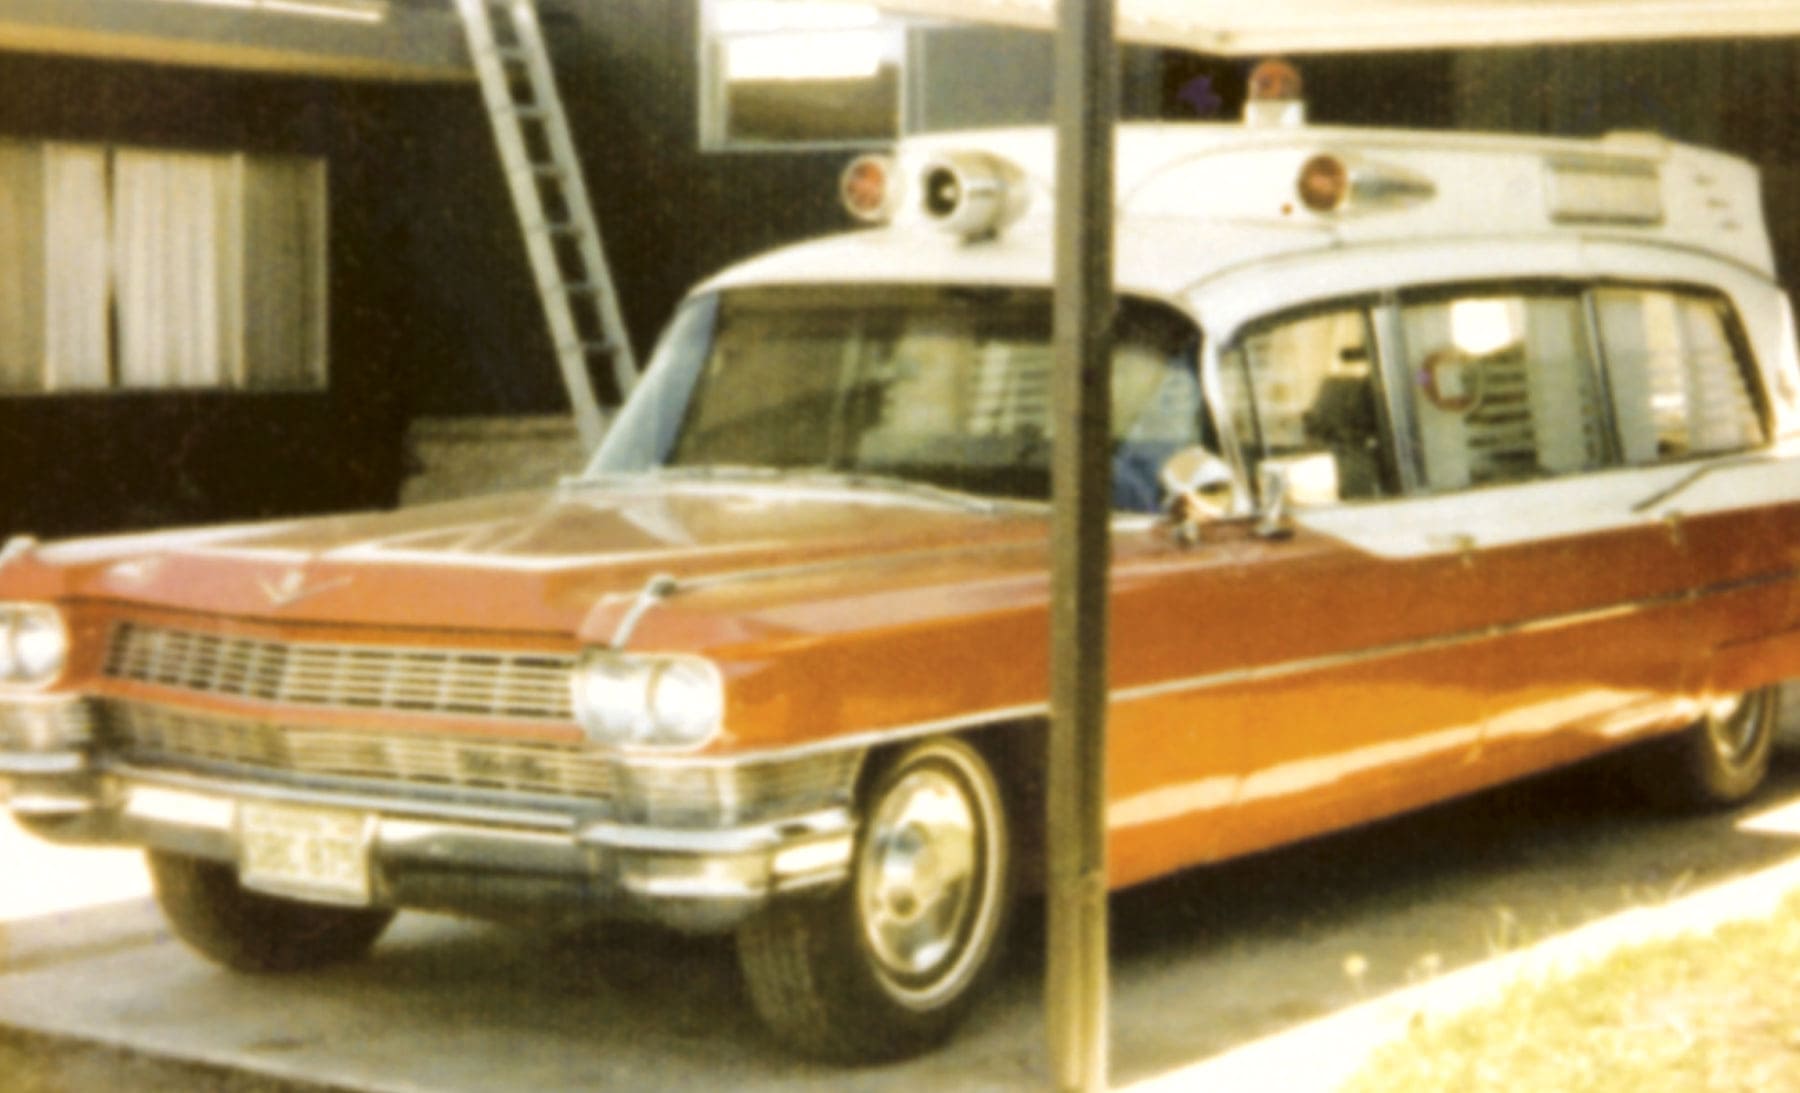 1959 Cadillac ambulance